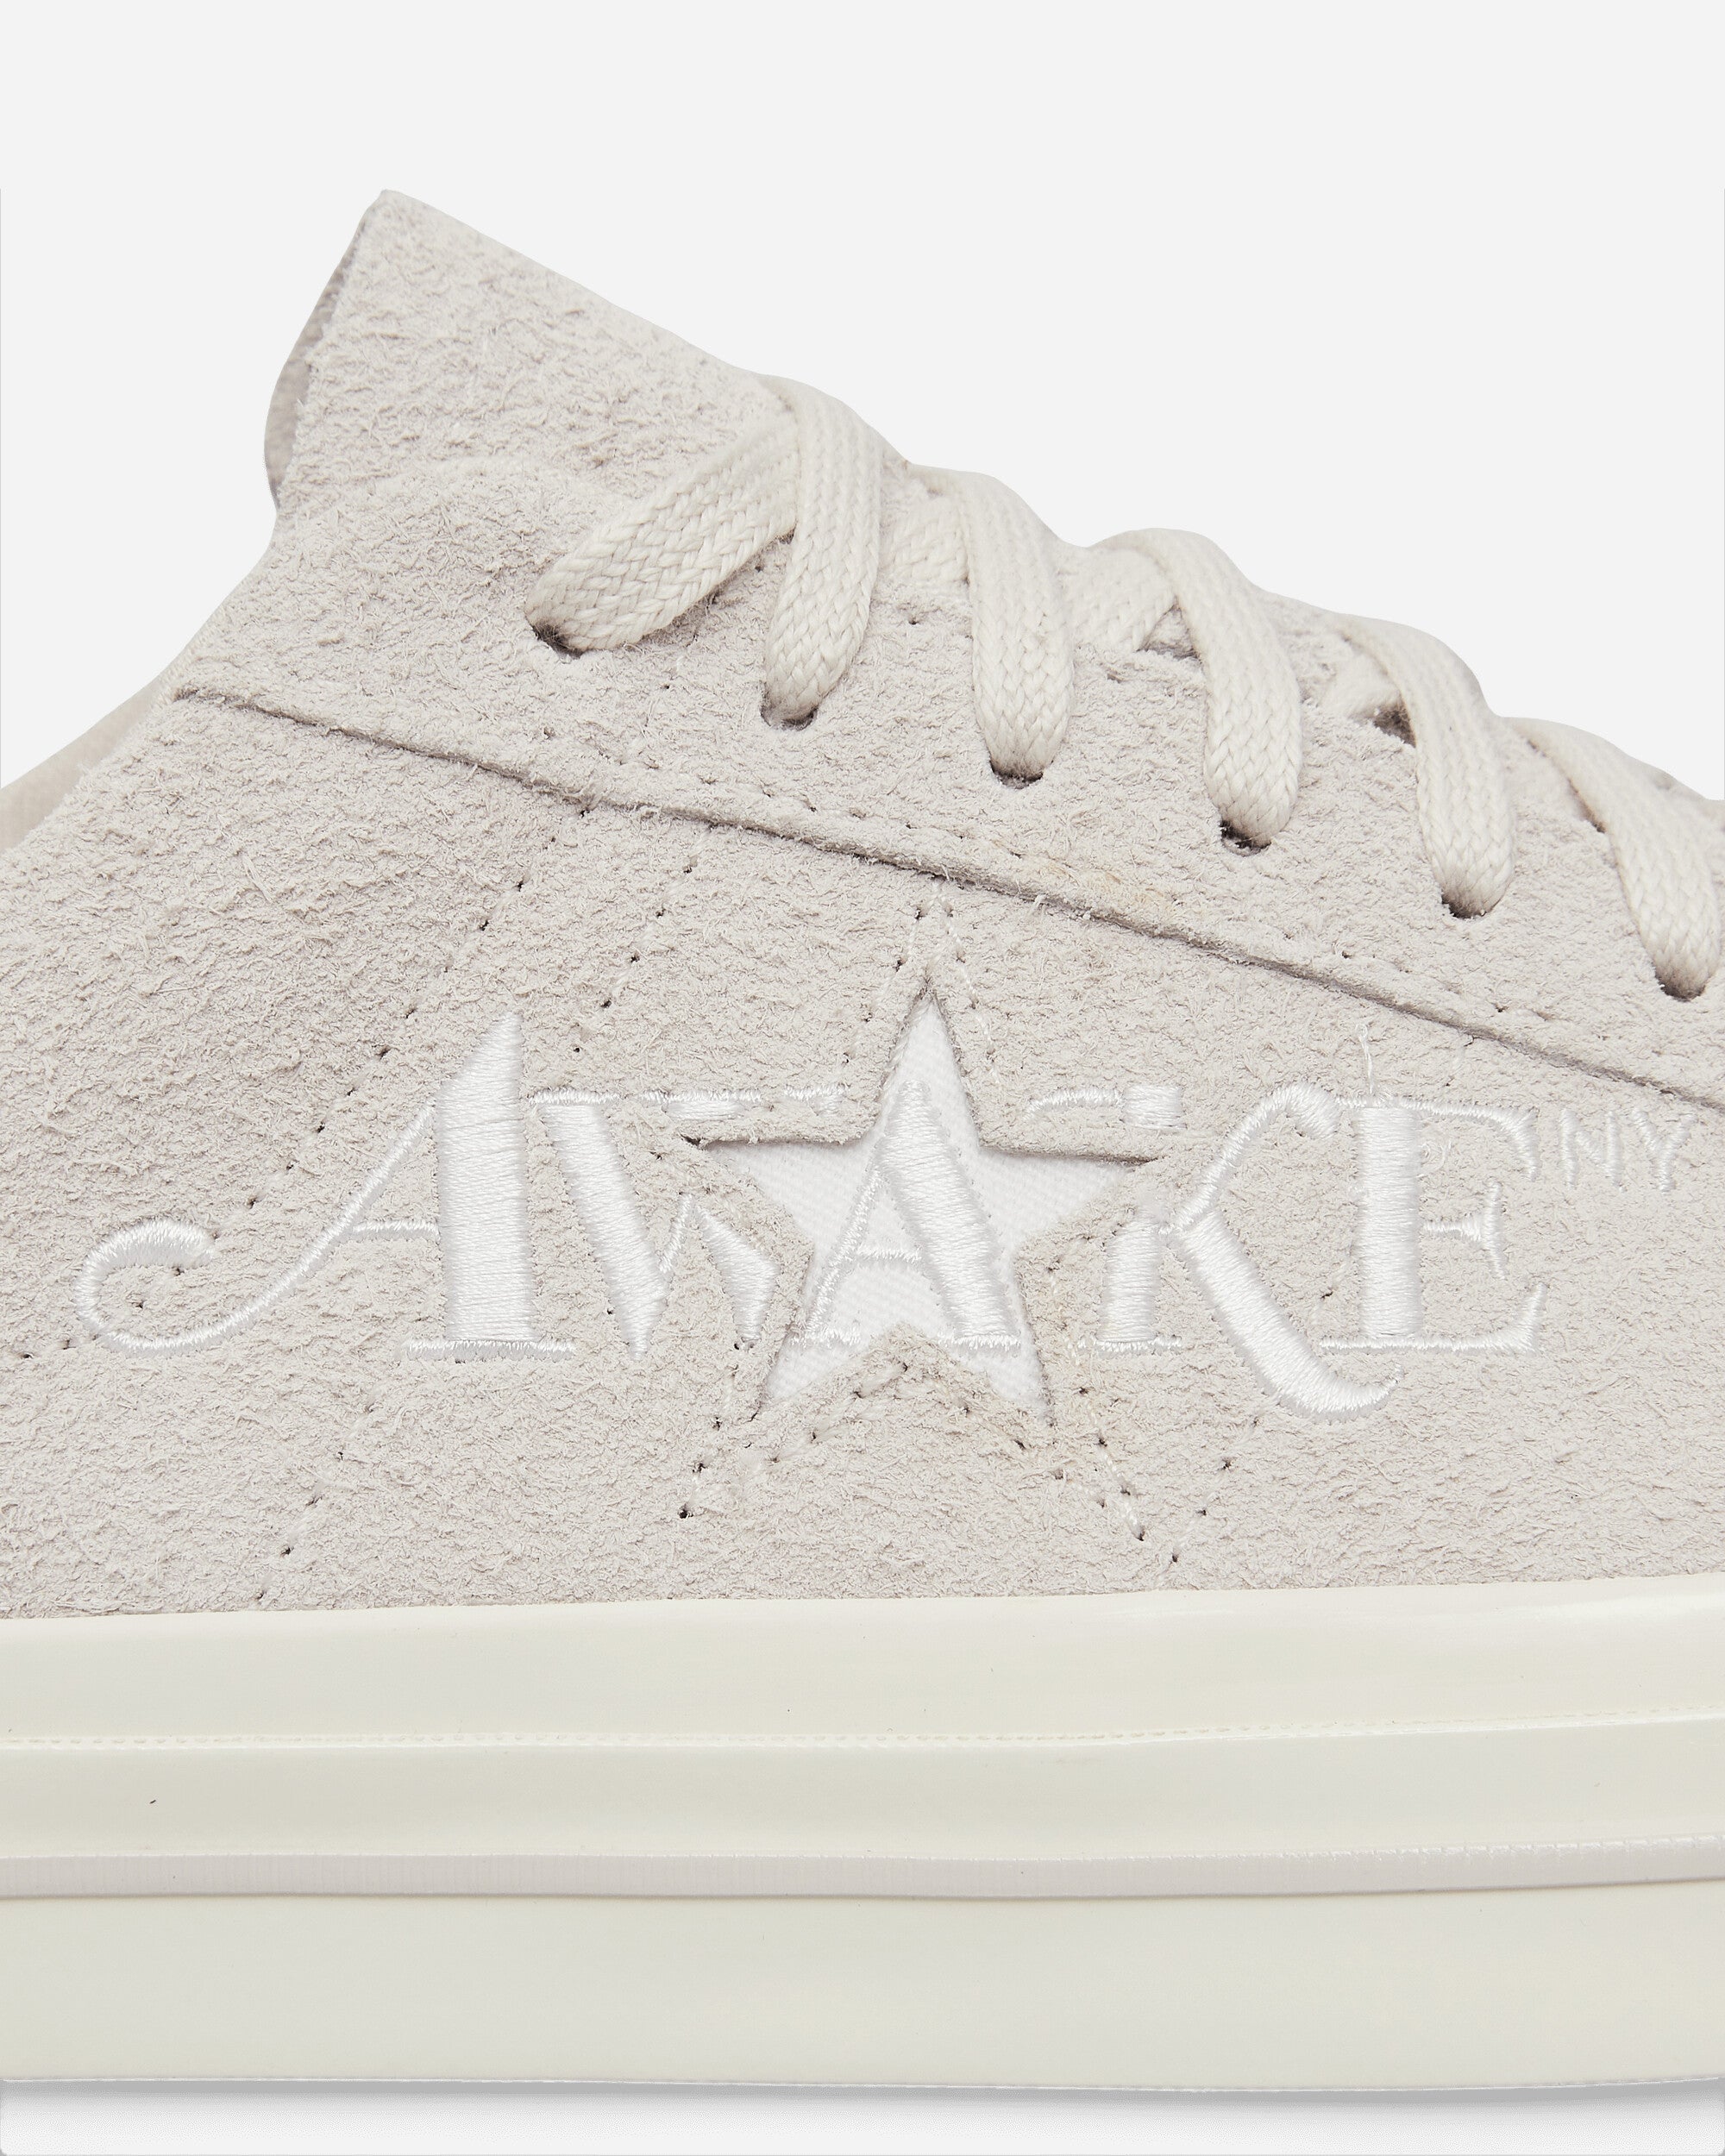 Converse Awake One Star Pro White Sand/Black/White Sneakers Low A07144C